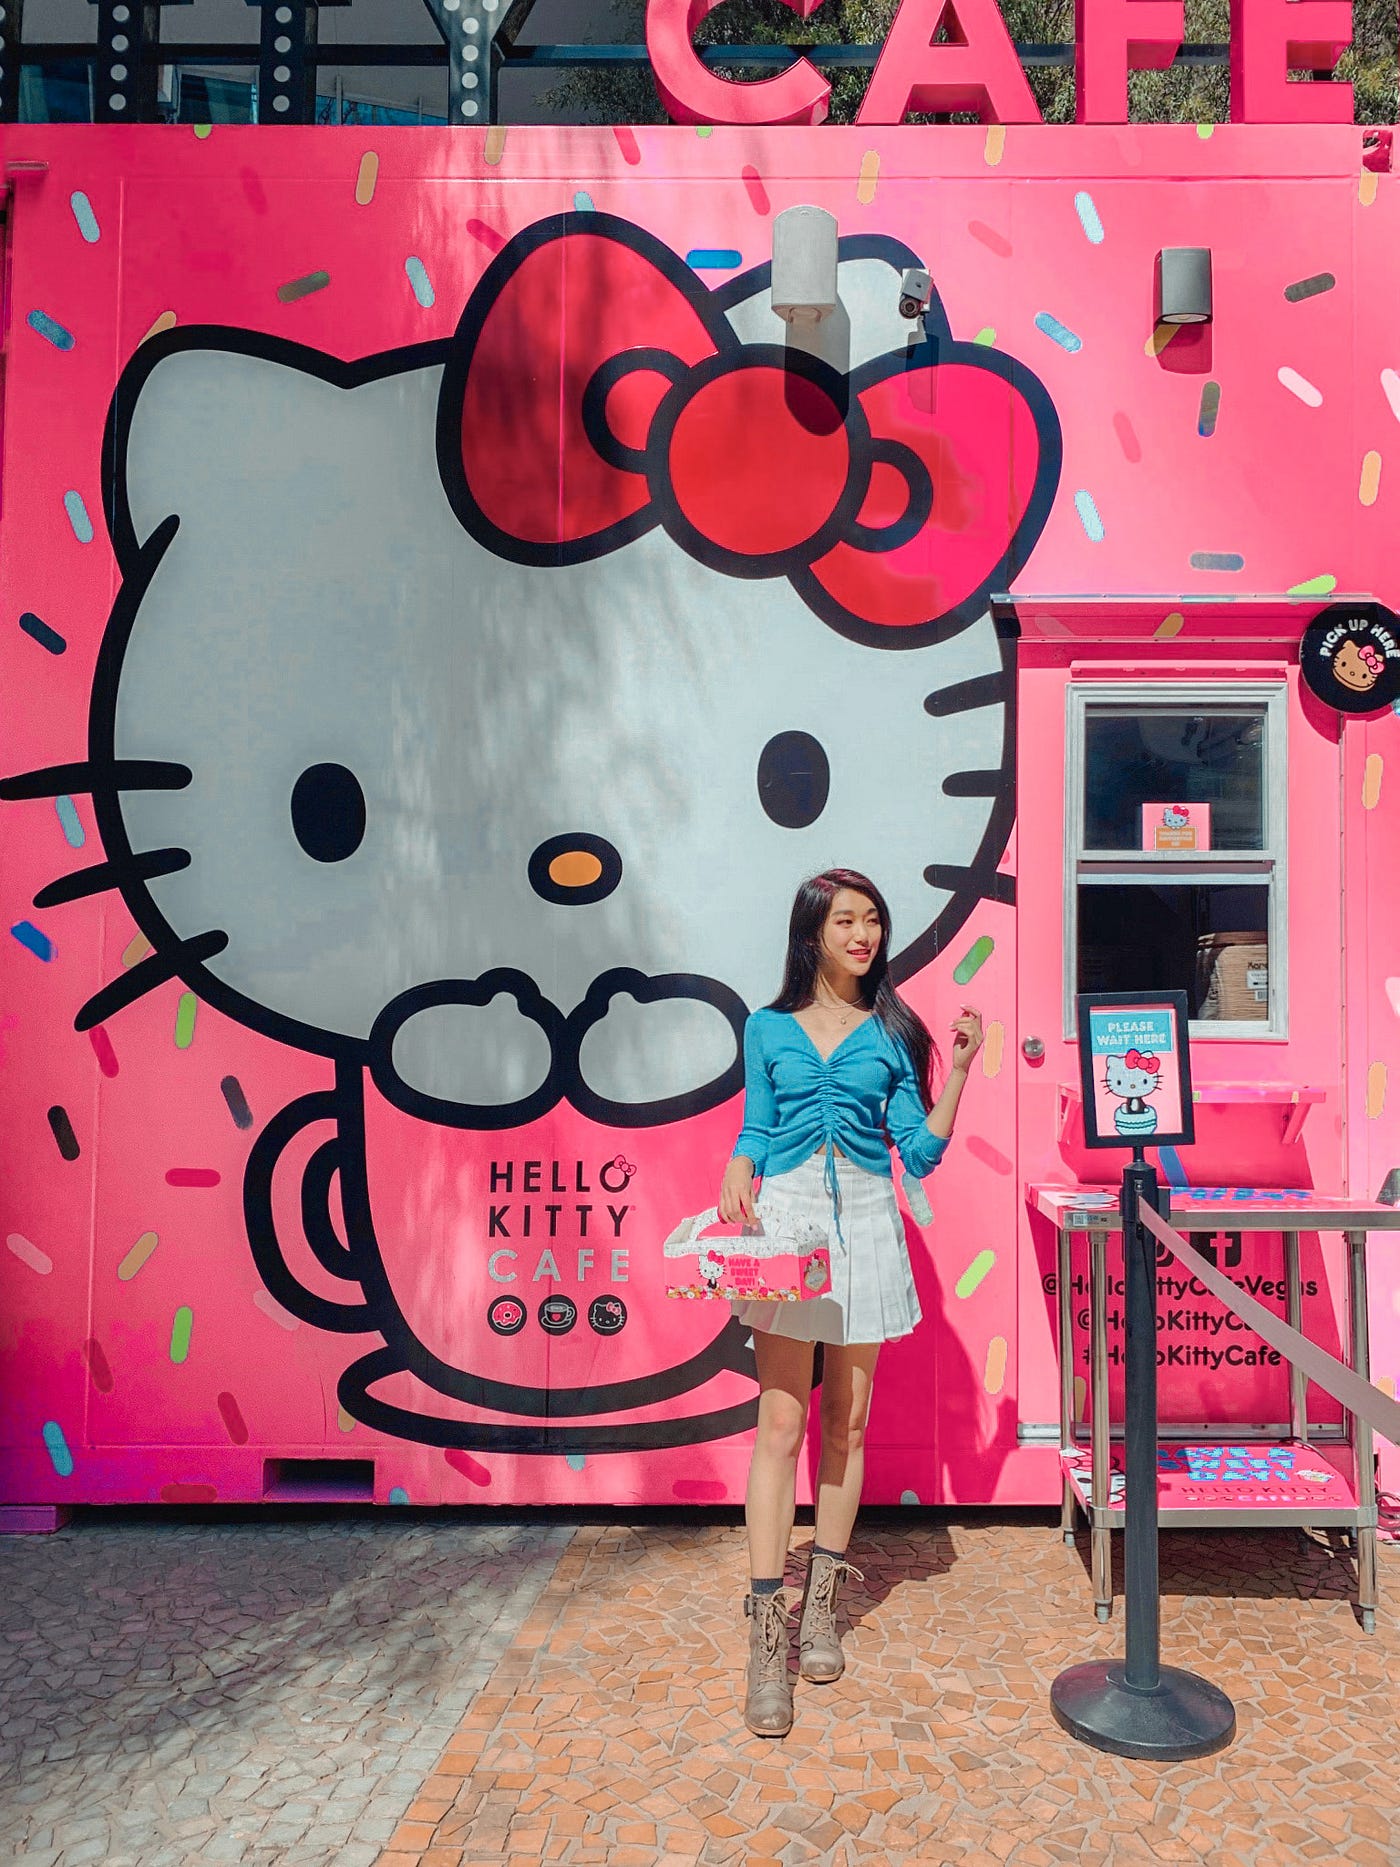 PHOTOS: Hello Kitty Café Las Vegas opens on the Strip Friday